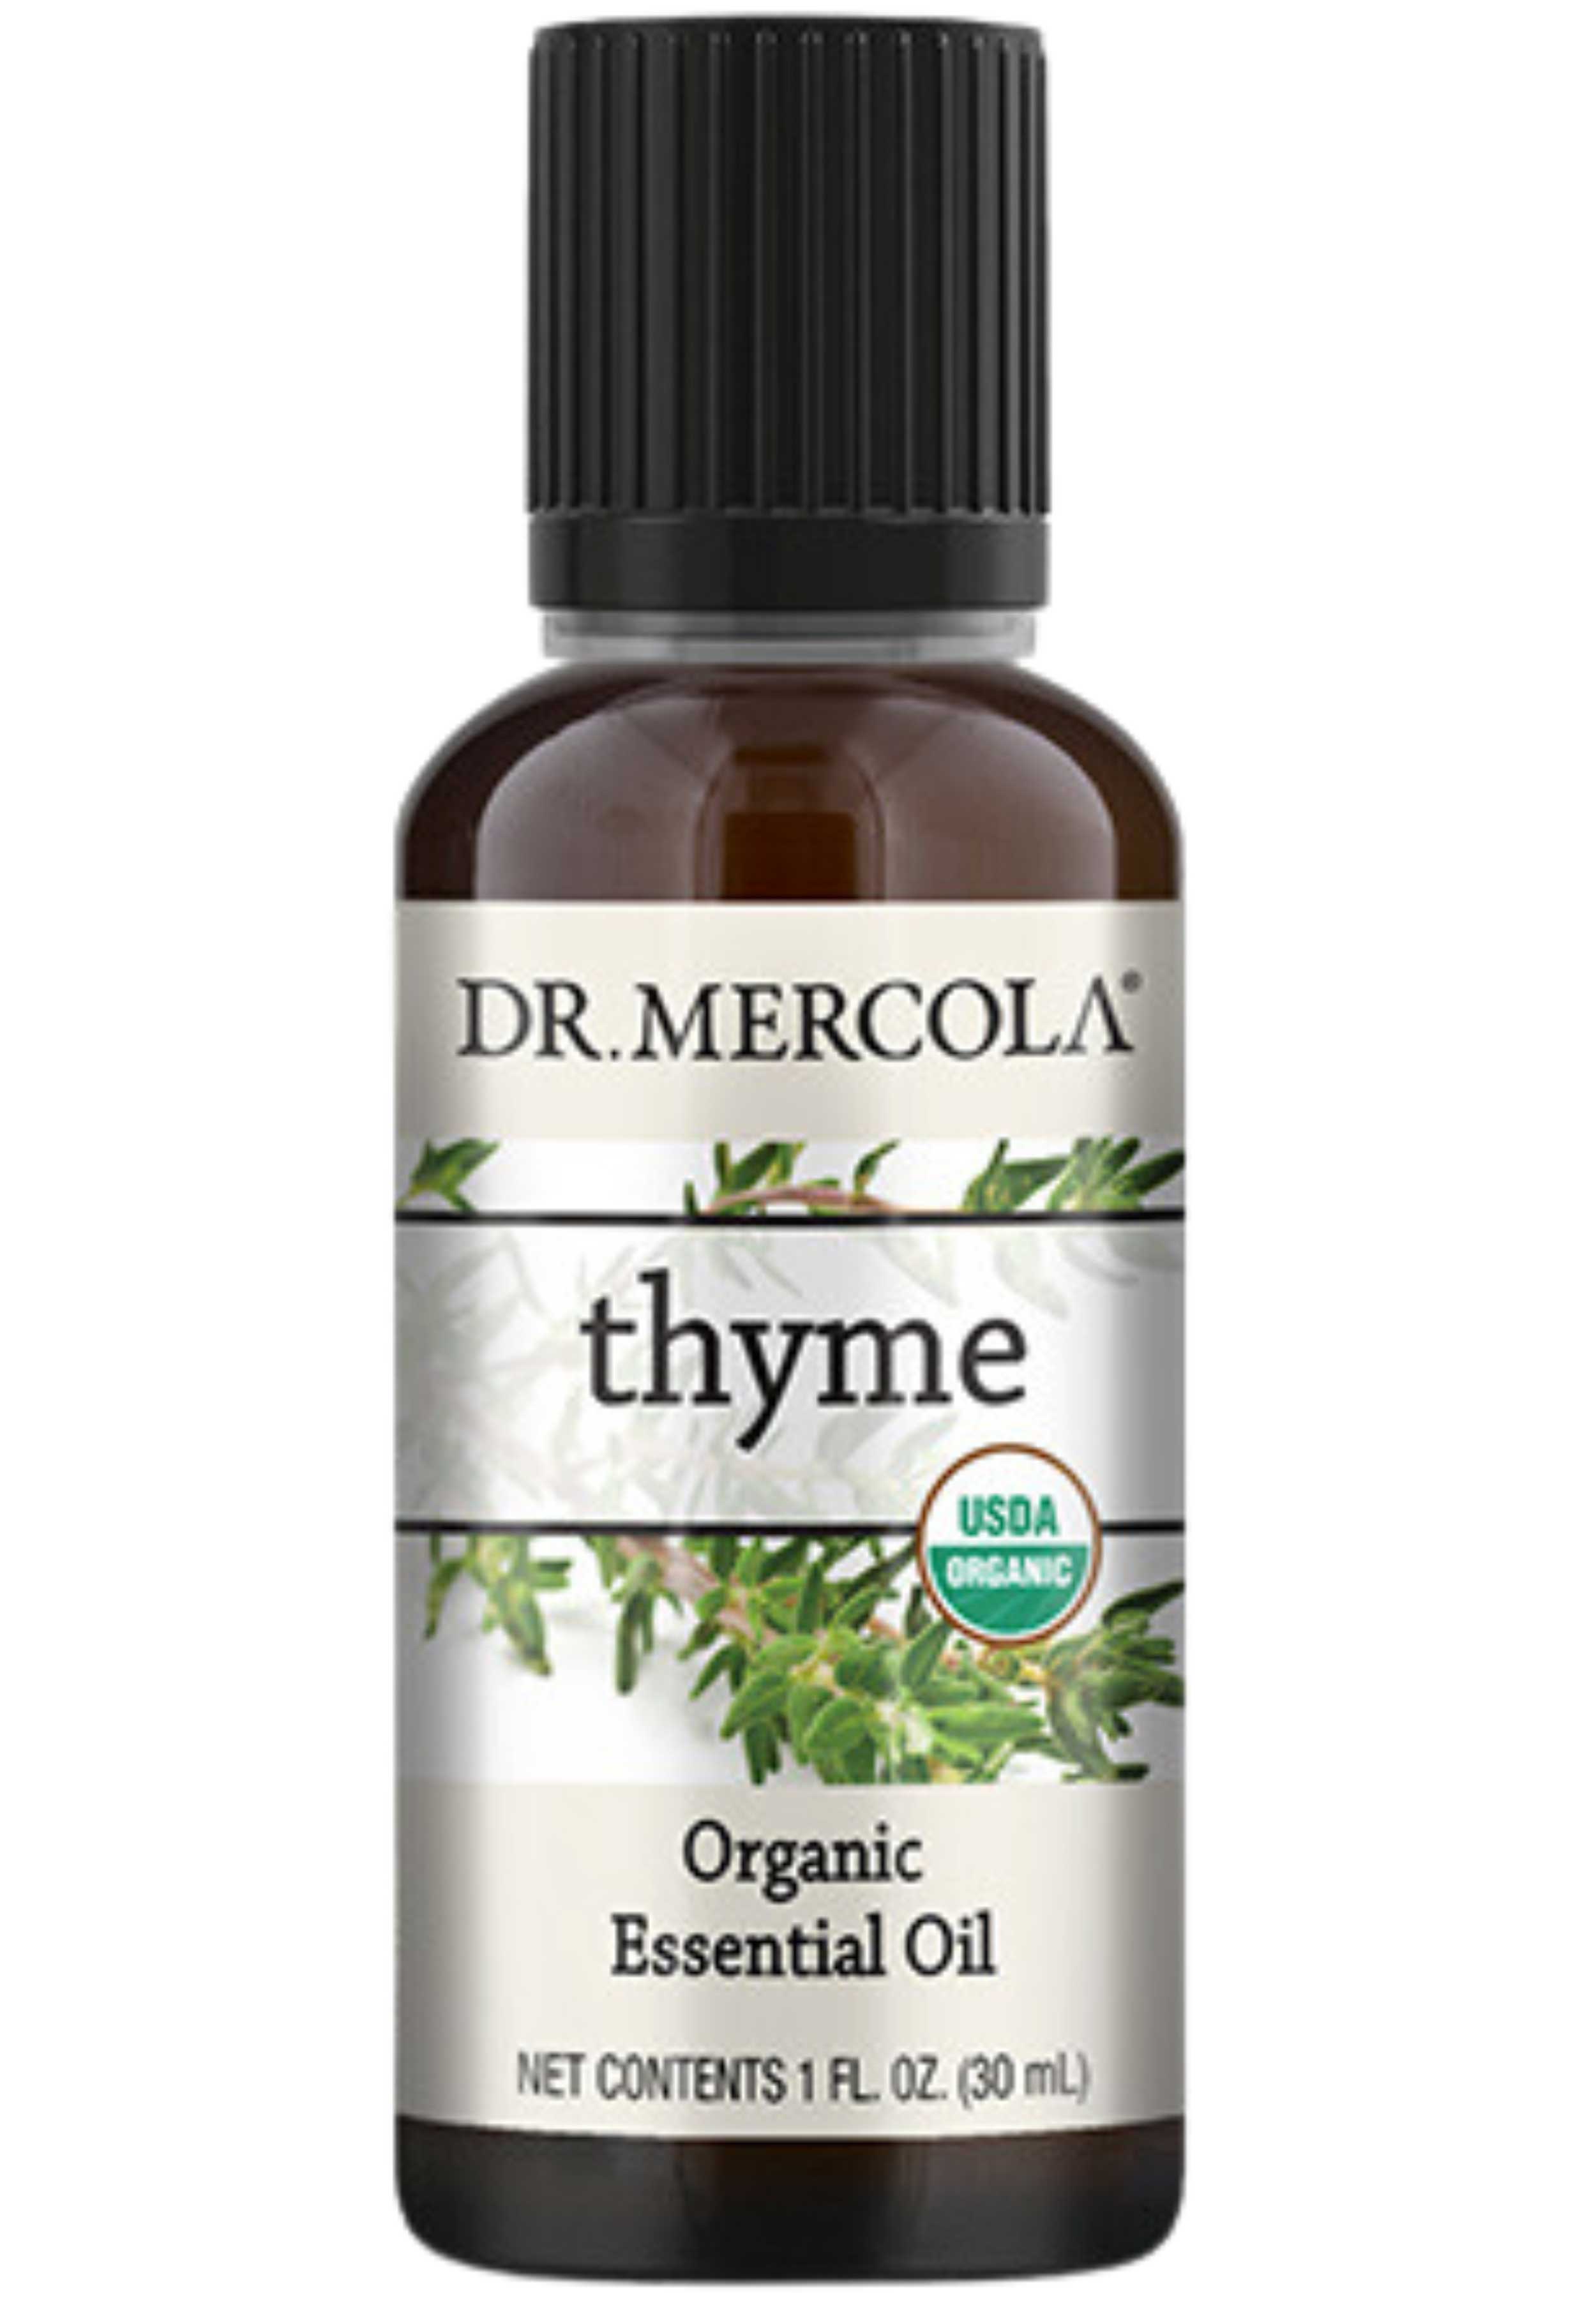 Dr. Mercola Thyme Oil Organic